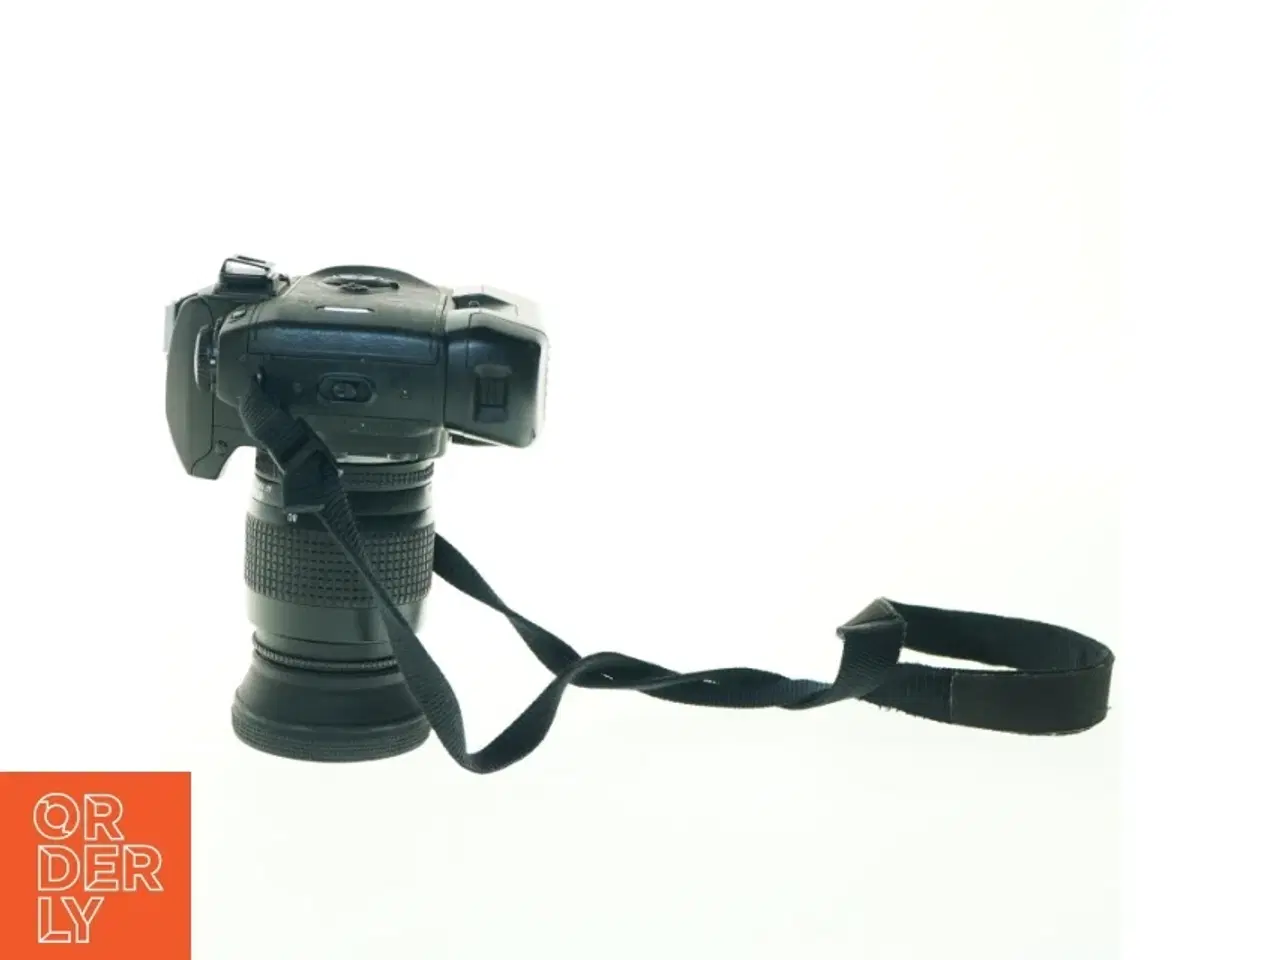 Billede 2 - Canon spejlreflekskamera fra Canon (str. 16 x 14 cm)